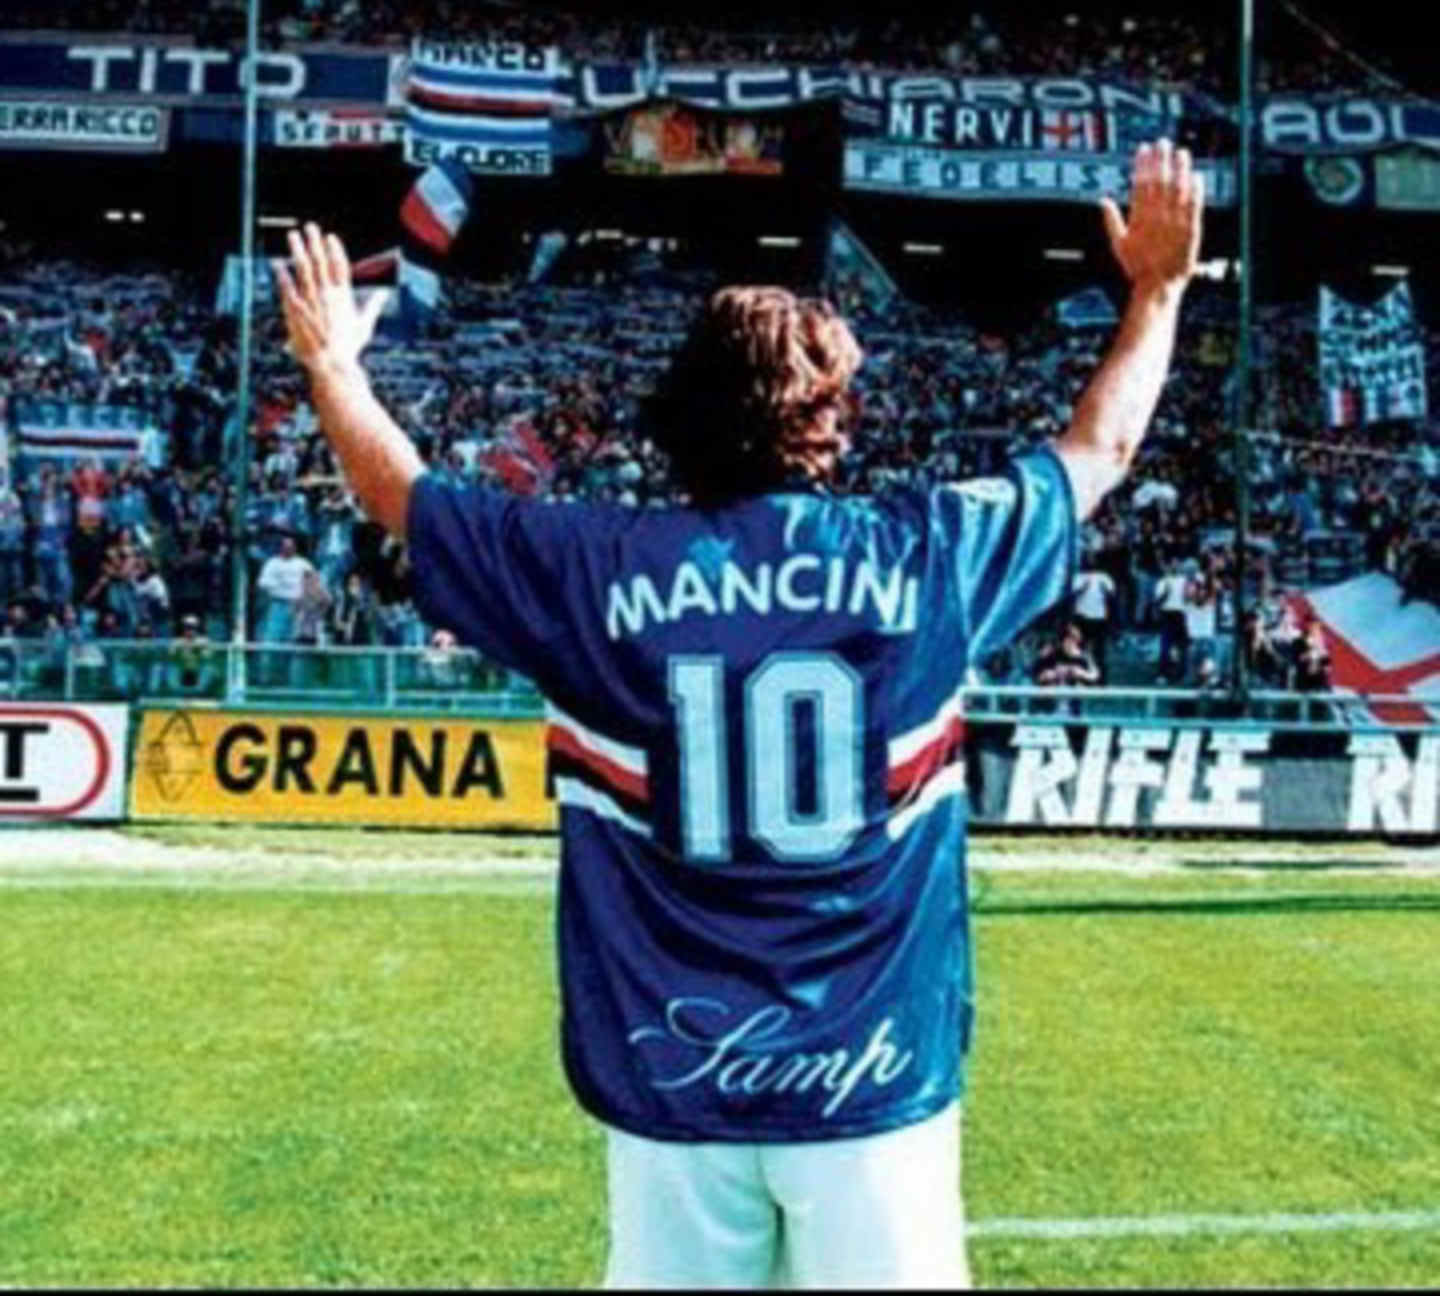 Mancini Career